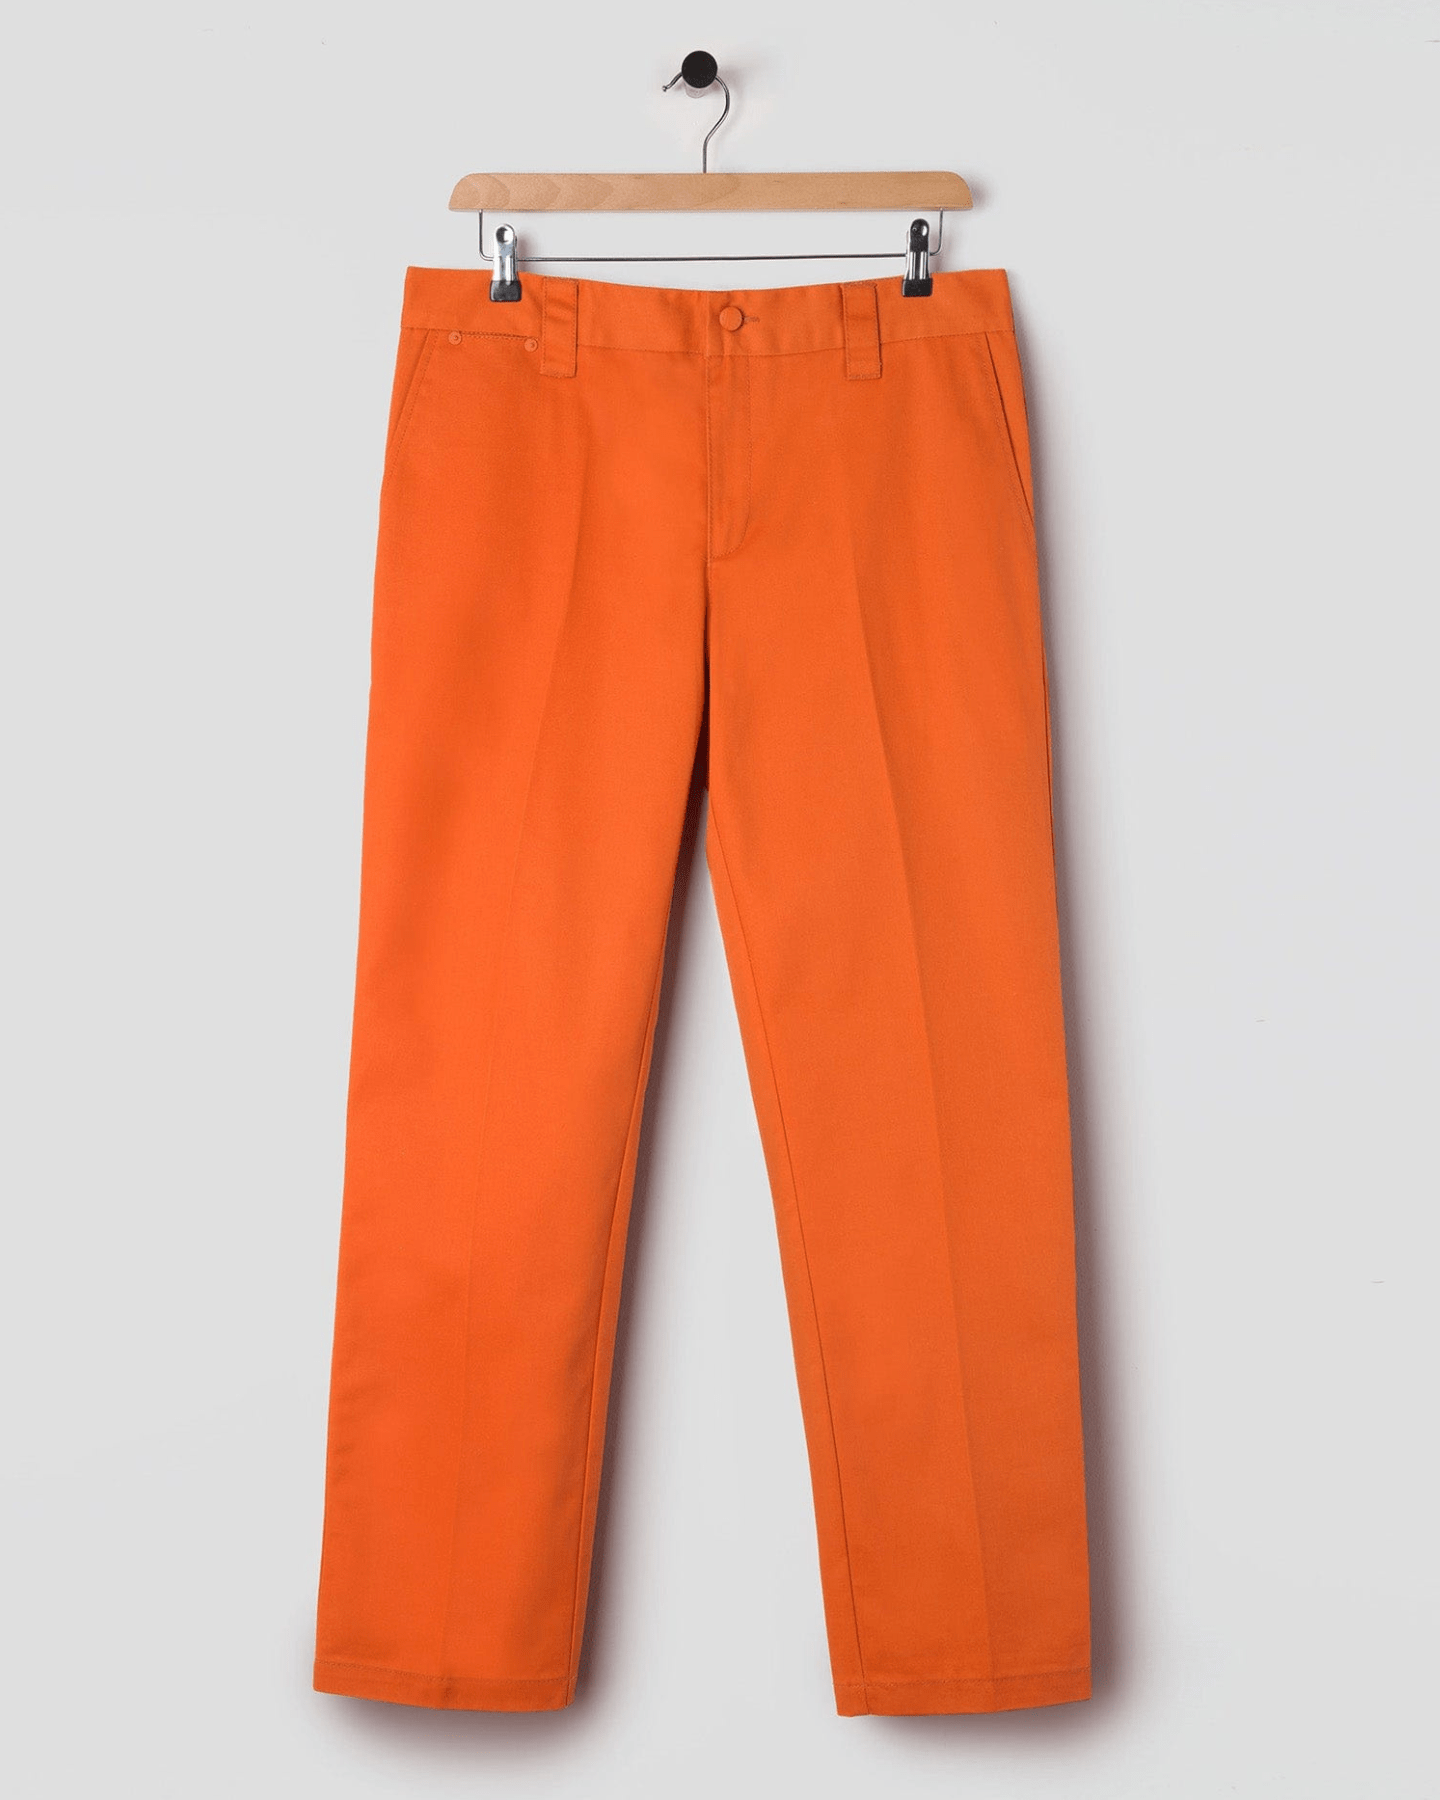 Men's Orange Cargo Parachute Pants 🪂 Thrifted 🏪... - Depop